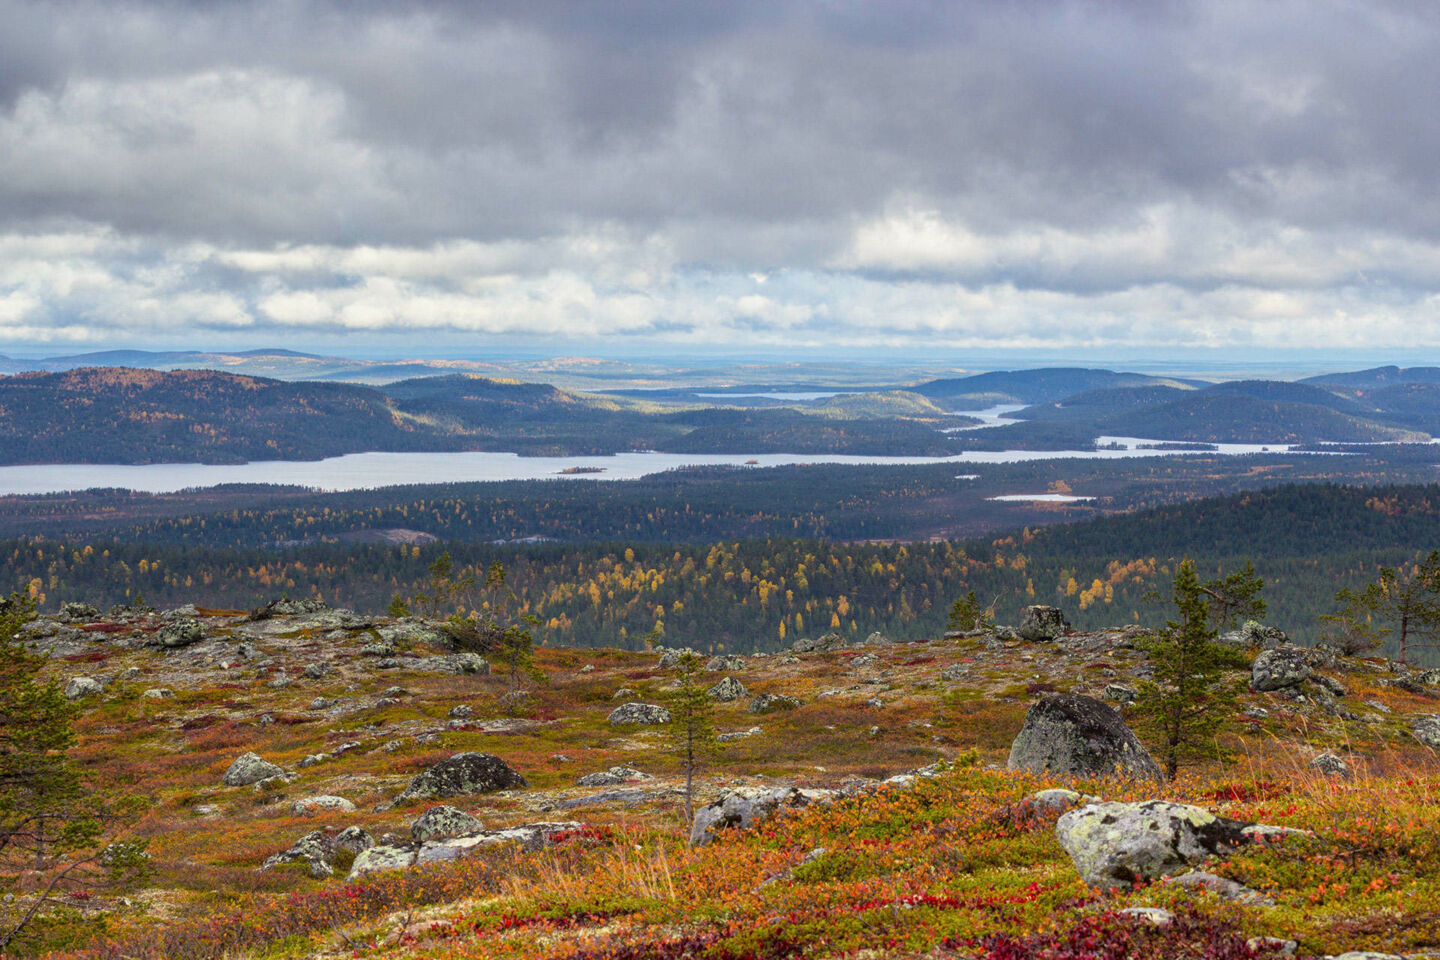 Otsmamotunturi fell in Inari, Finland in autumn, a wilderness film location